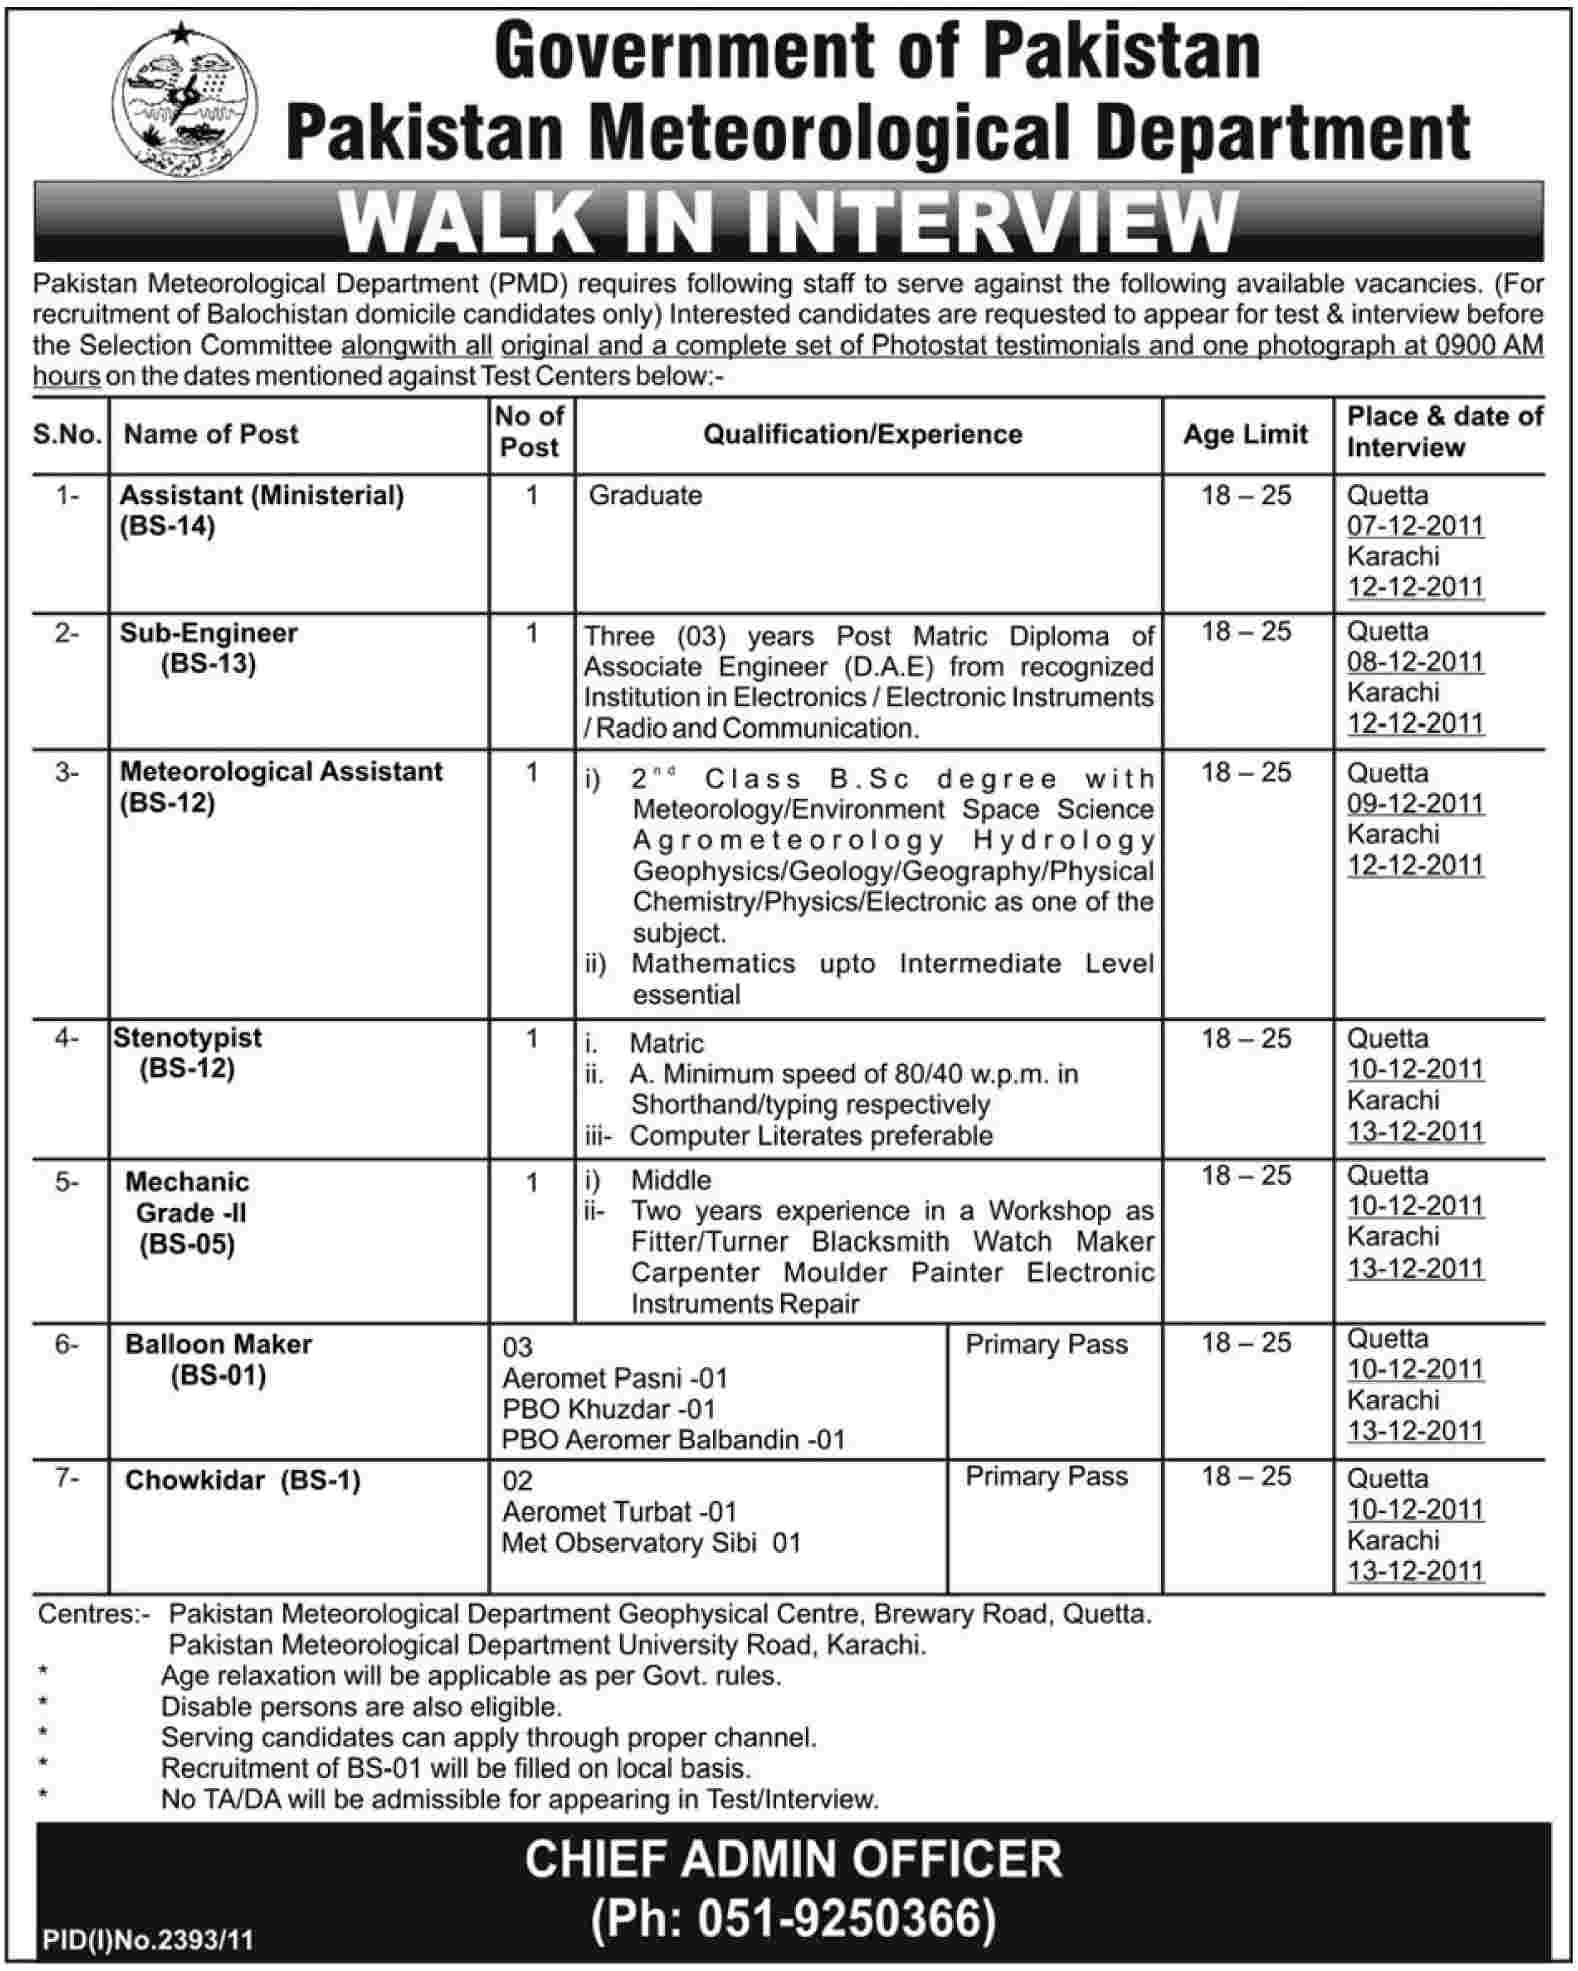 Pakistan Meteorological Department Government of Pakistan Job Opportunities